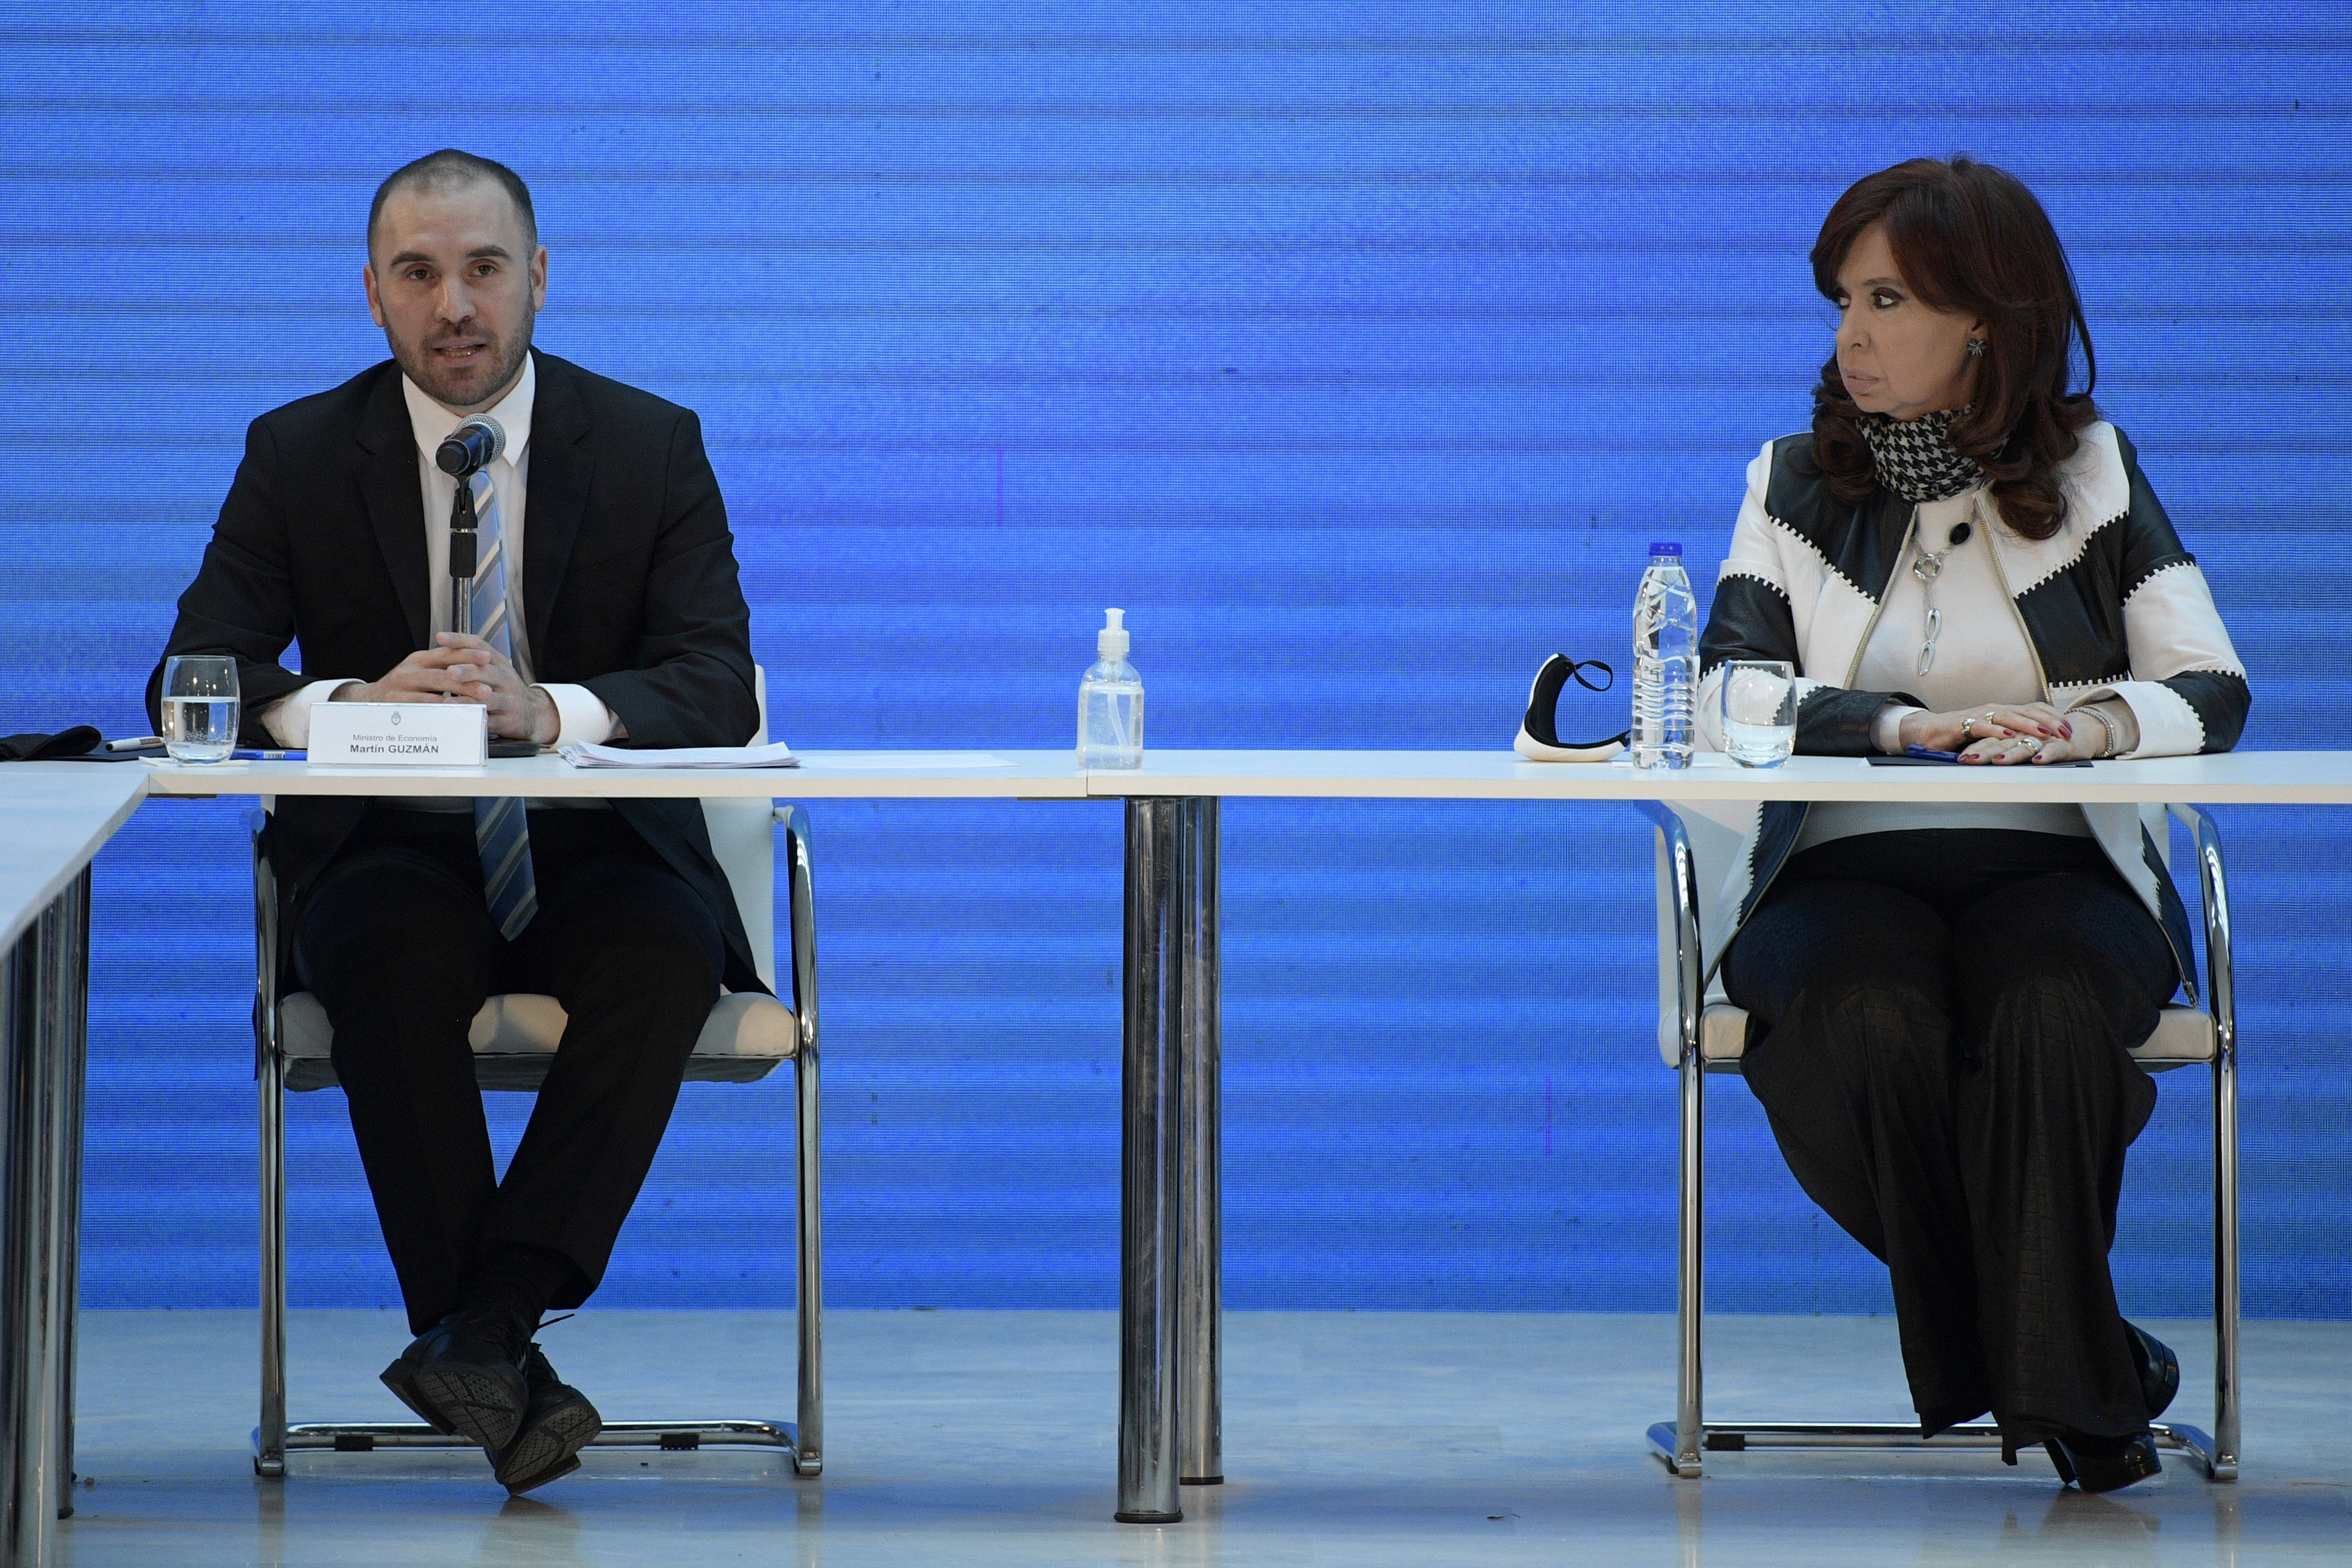 Martín Guzmán le contestó a Cristina Kirchner: “Es importante que el déficit fiscal se reduzca”